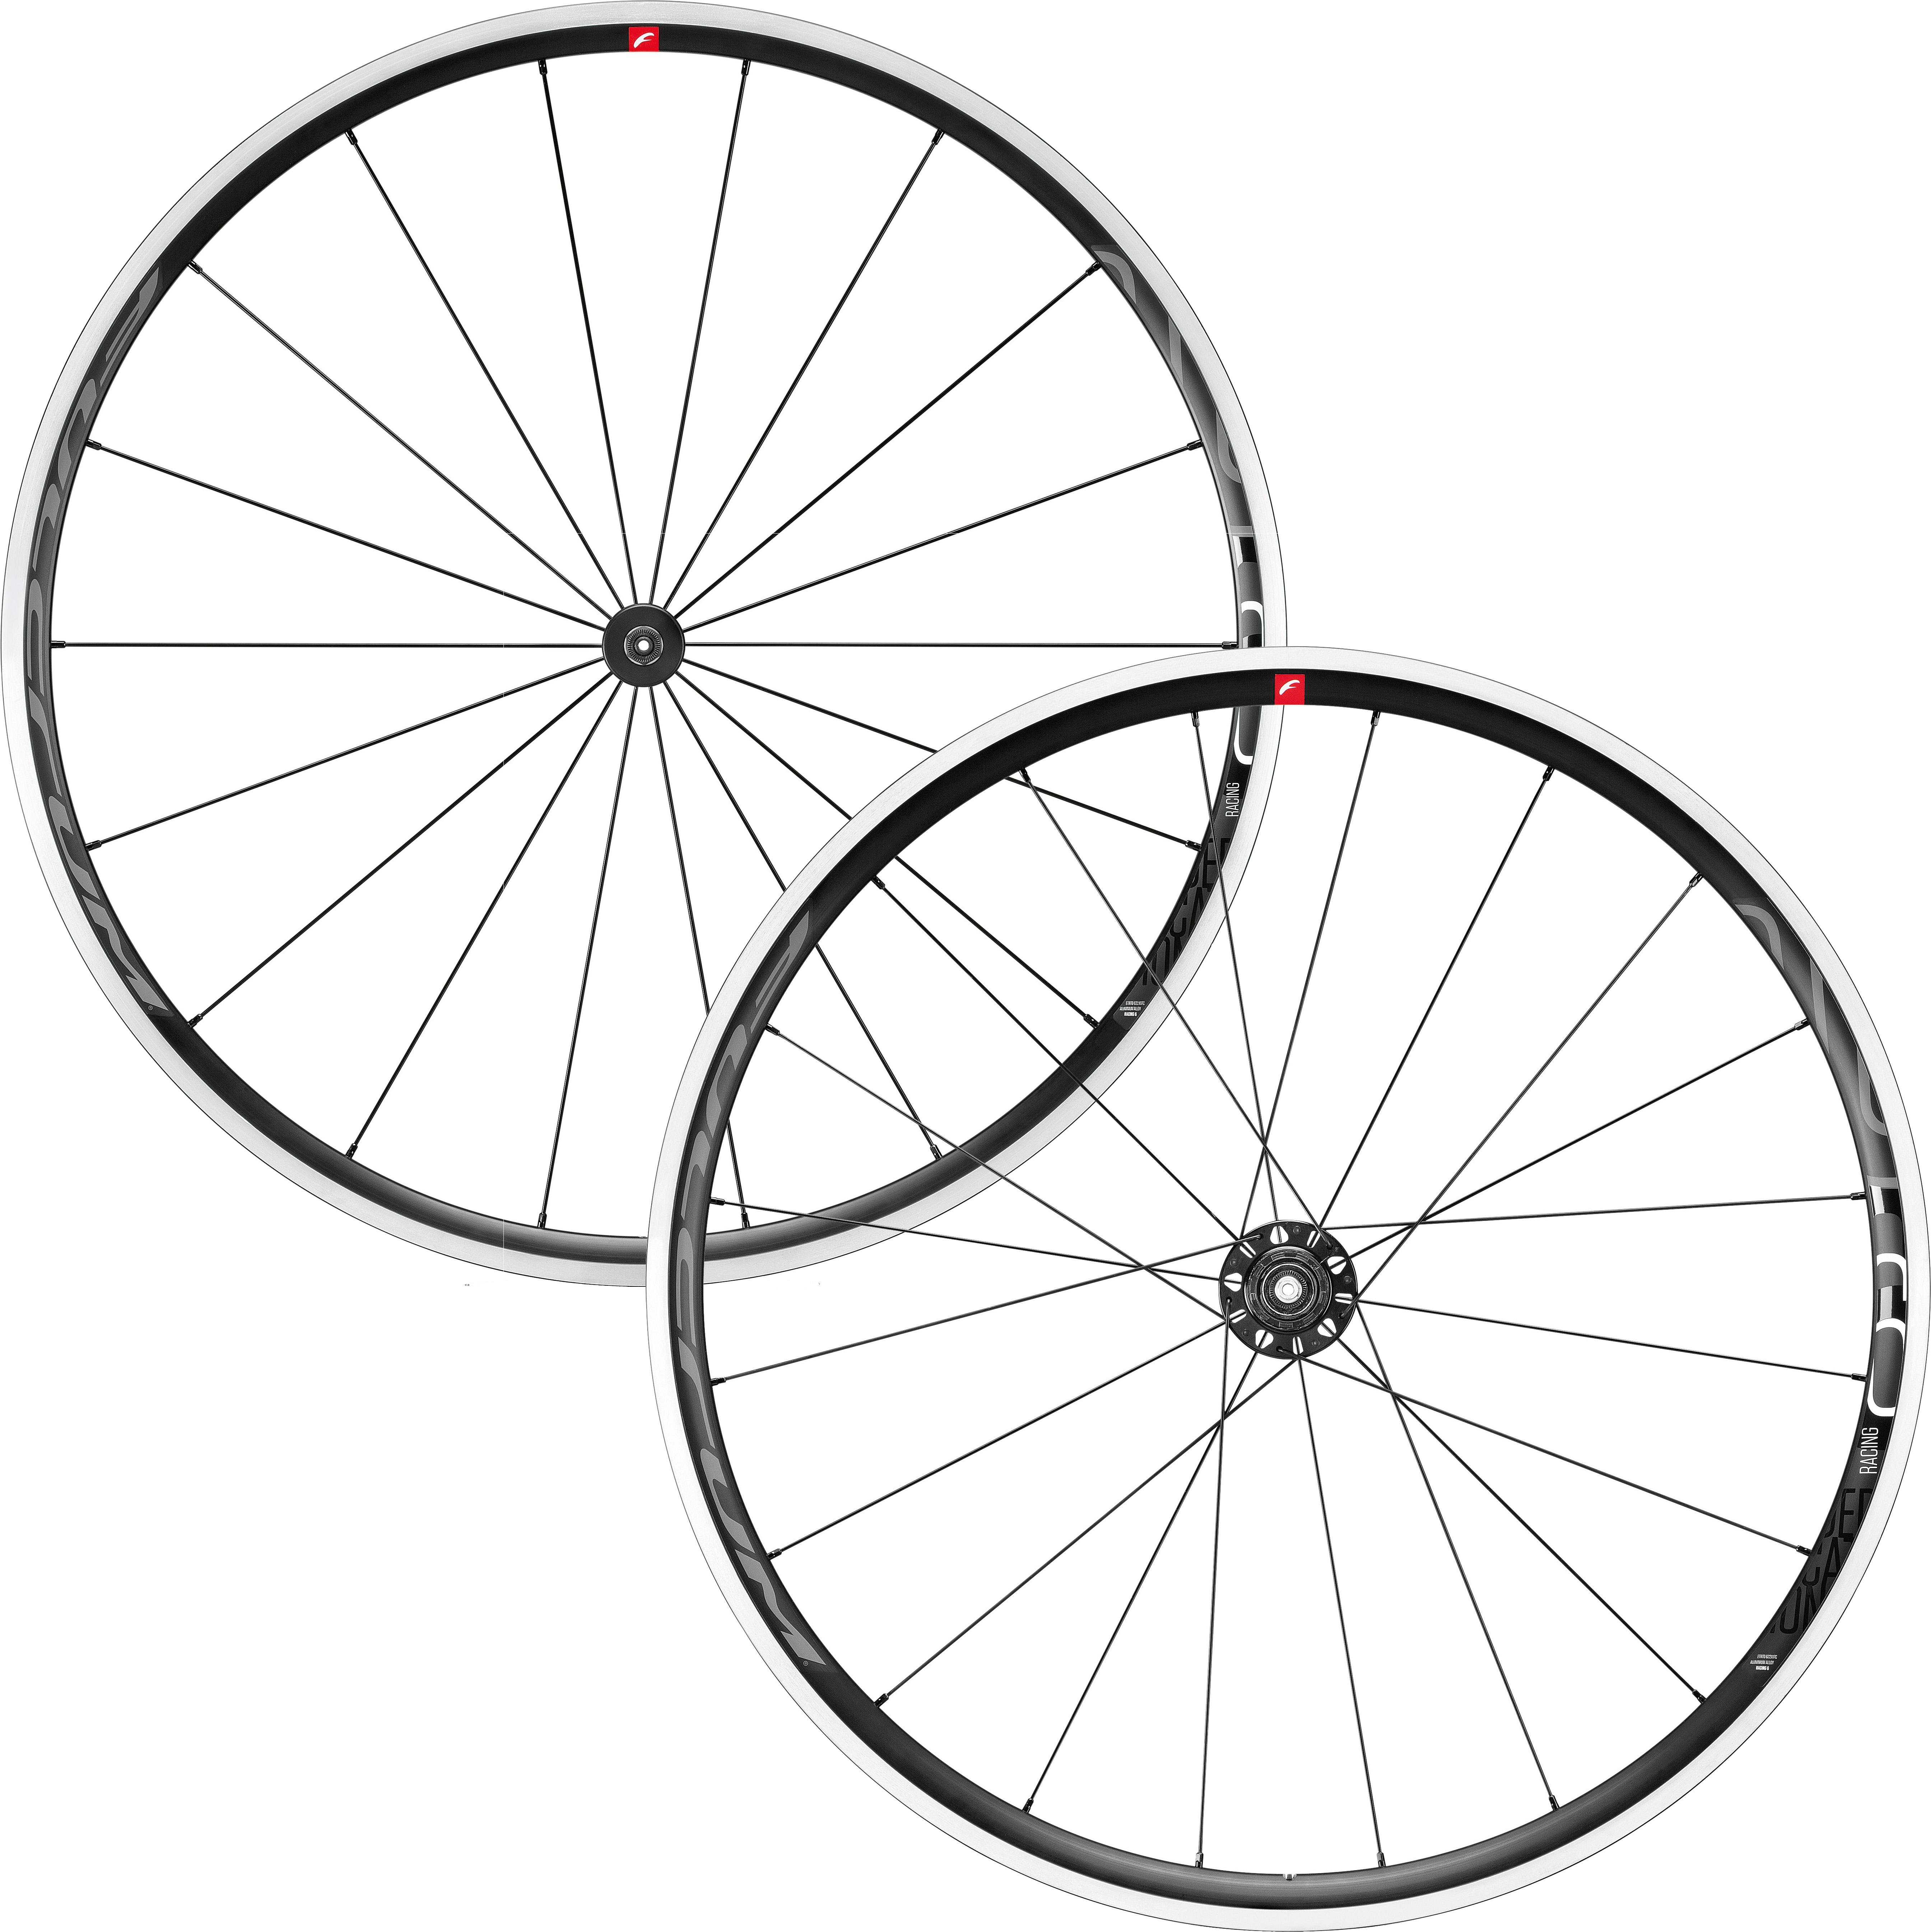 Fulcrum Racing 6 C17 Road Wheelset | cycling wheel